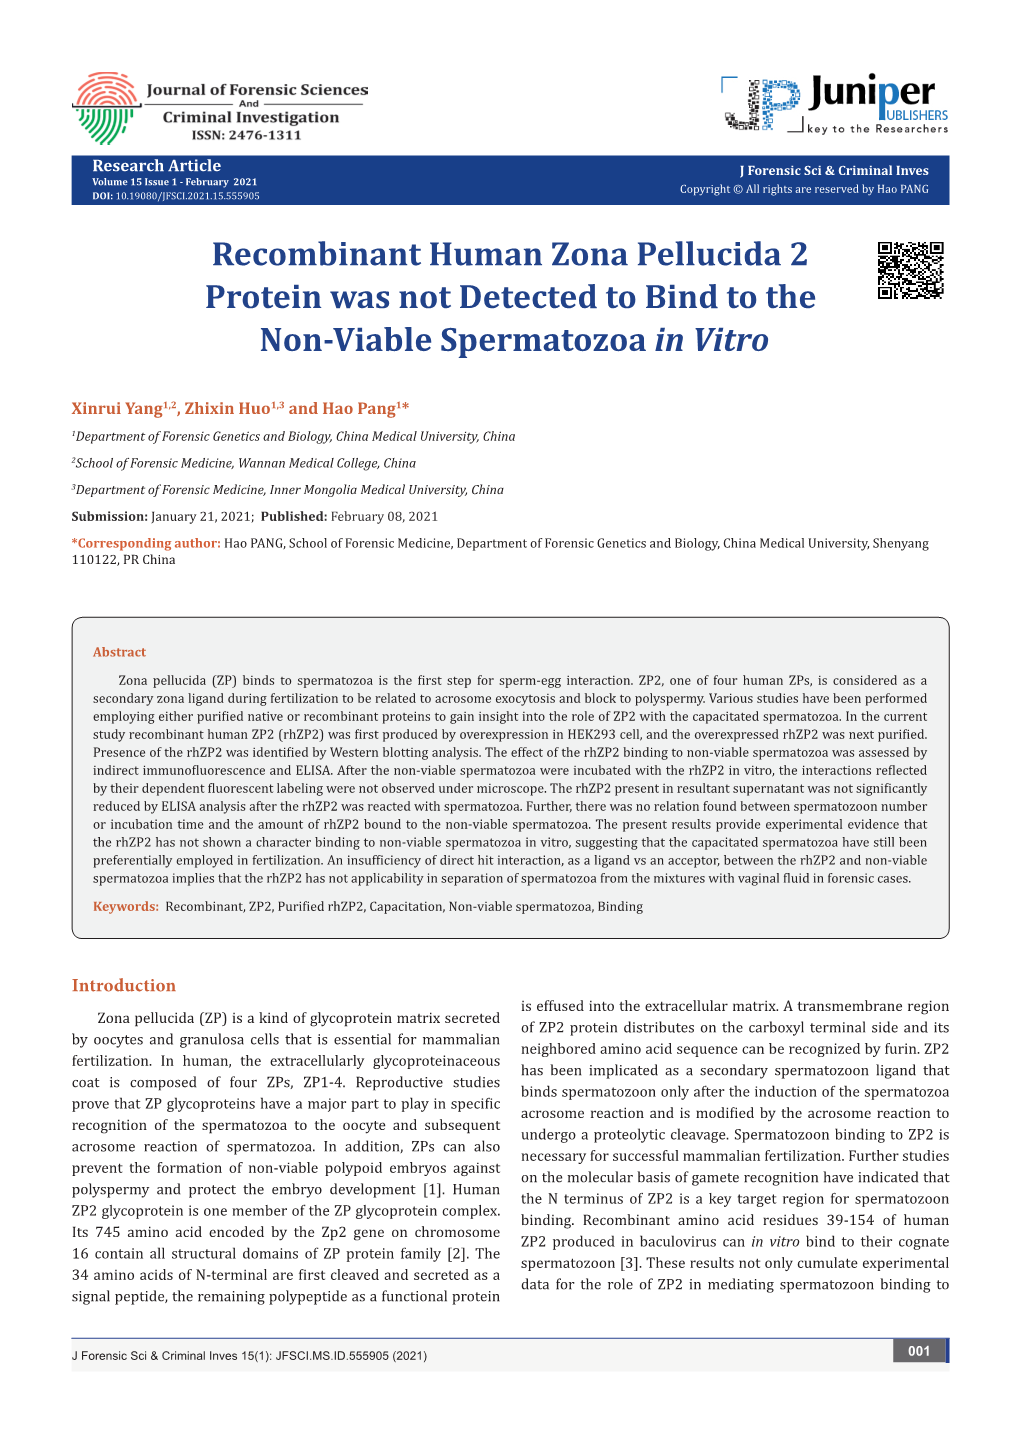 Recombinant Human Zona Pellucida 2 Protein Was Not Detected to Bind to the Non-Viable Spermatozoa in Vitro